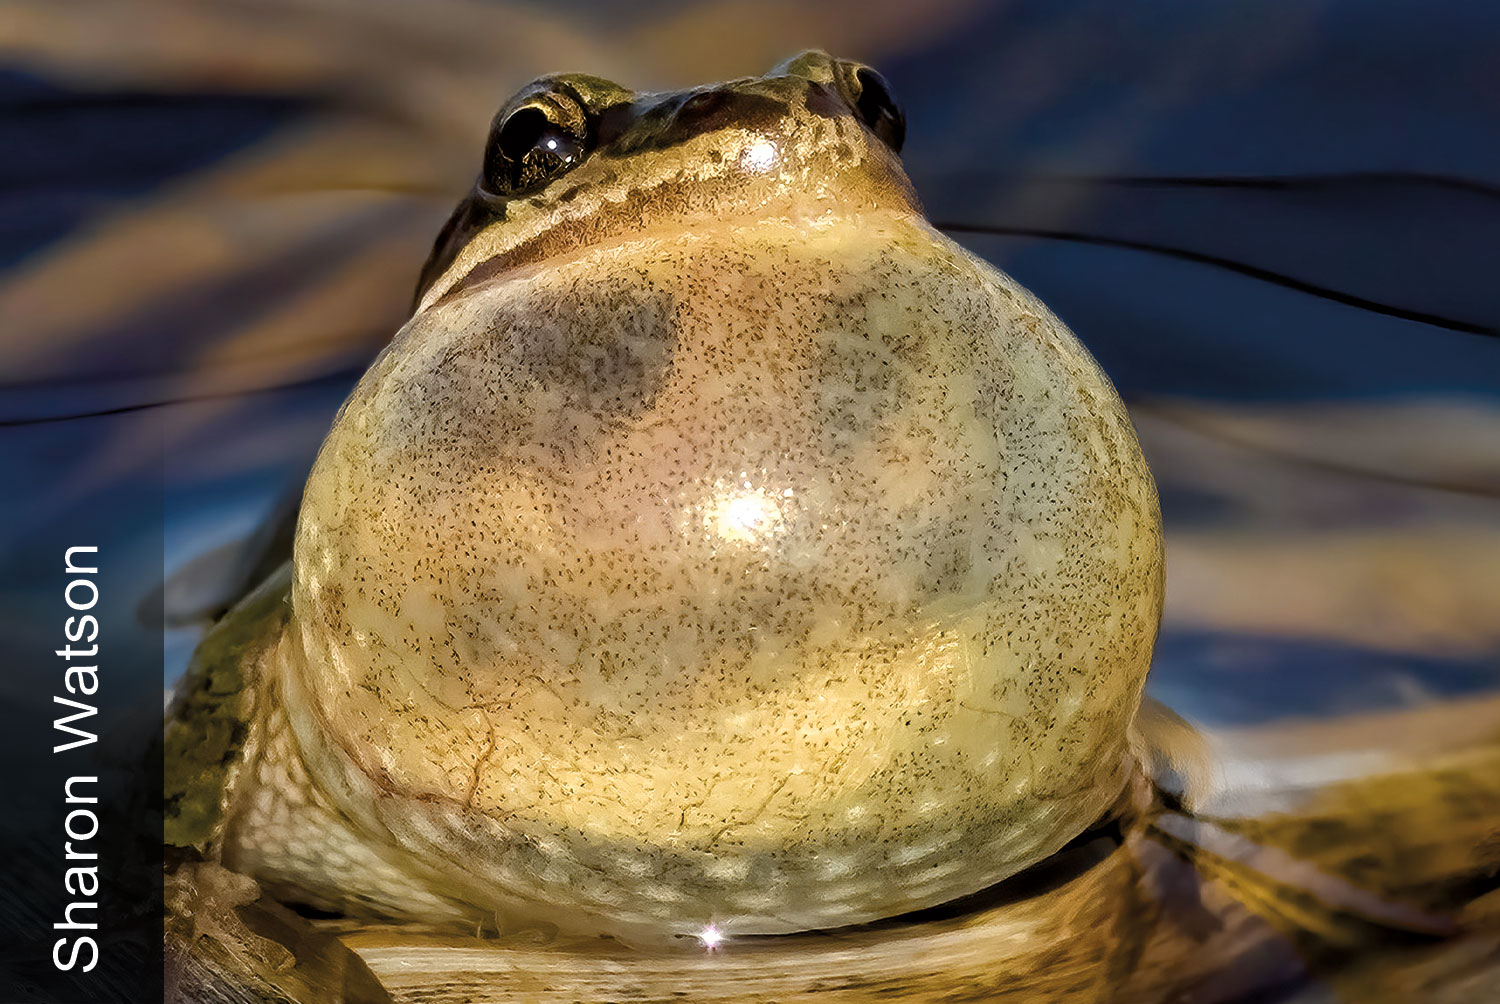 Chorus frog